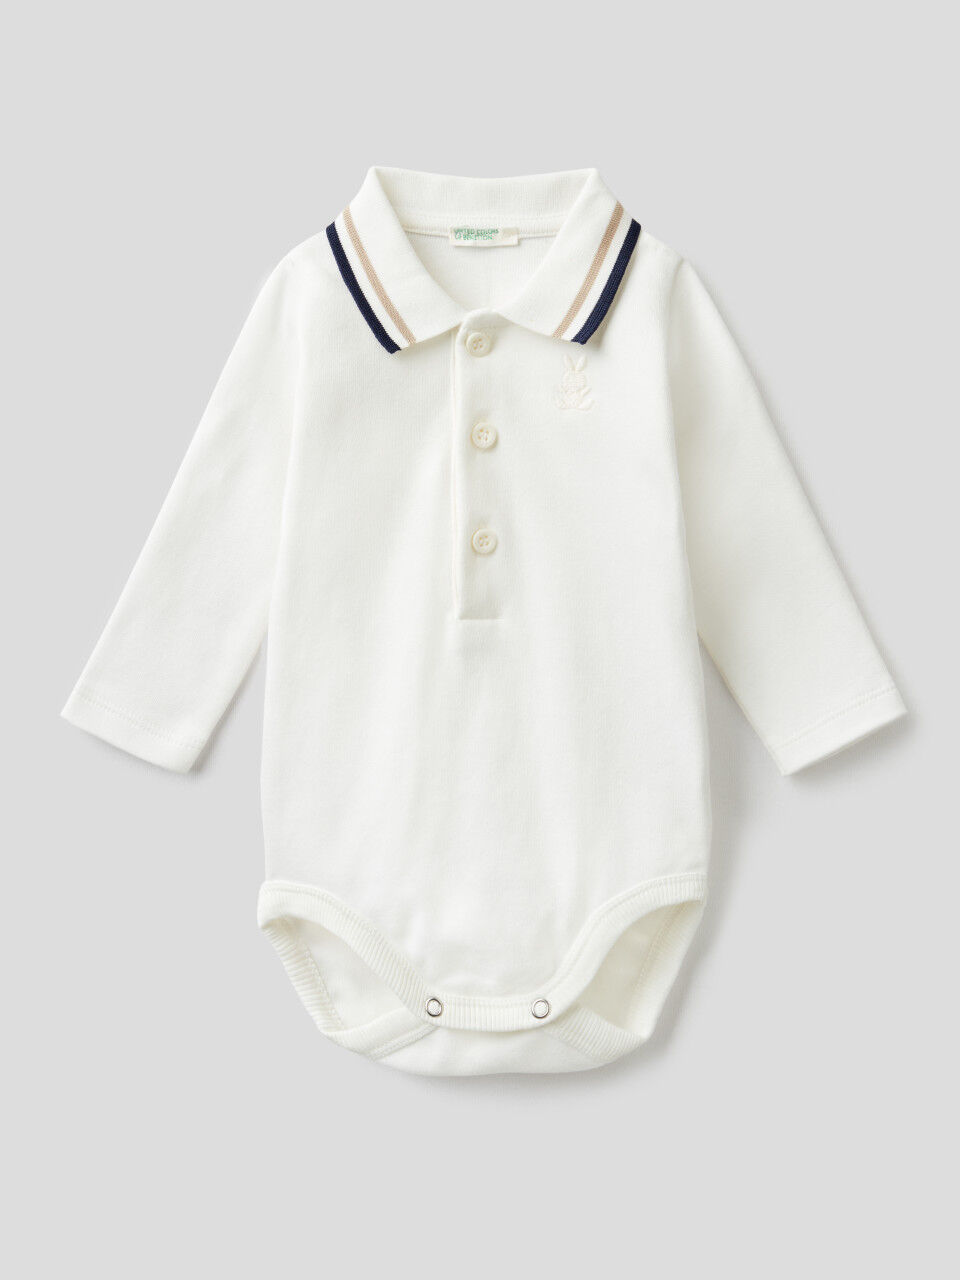 United Colors of Benetton Camisa de Polo para Bebés 